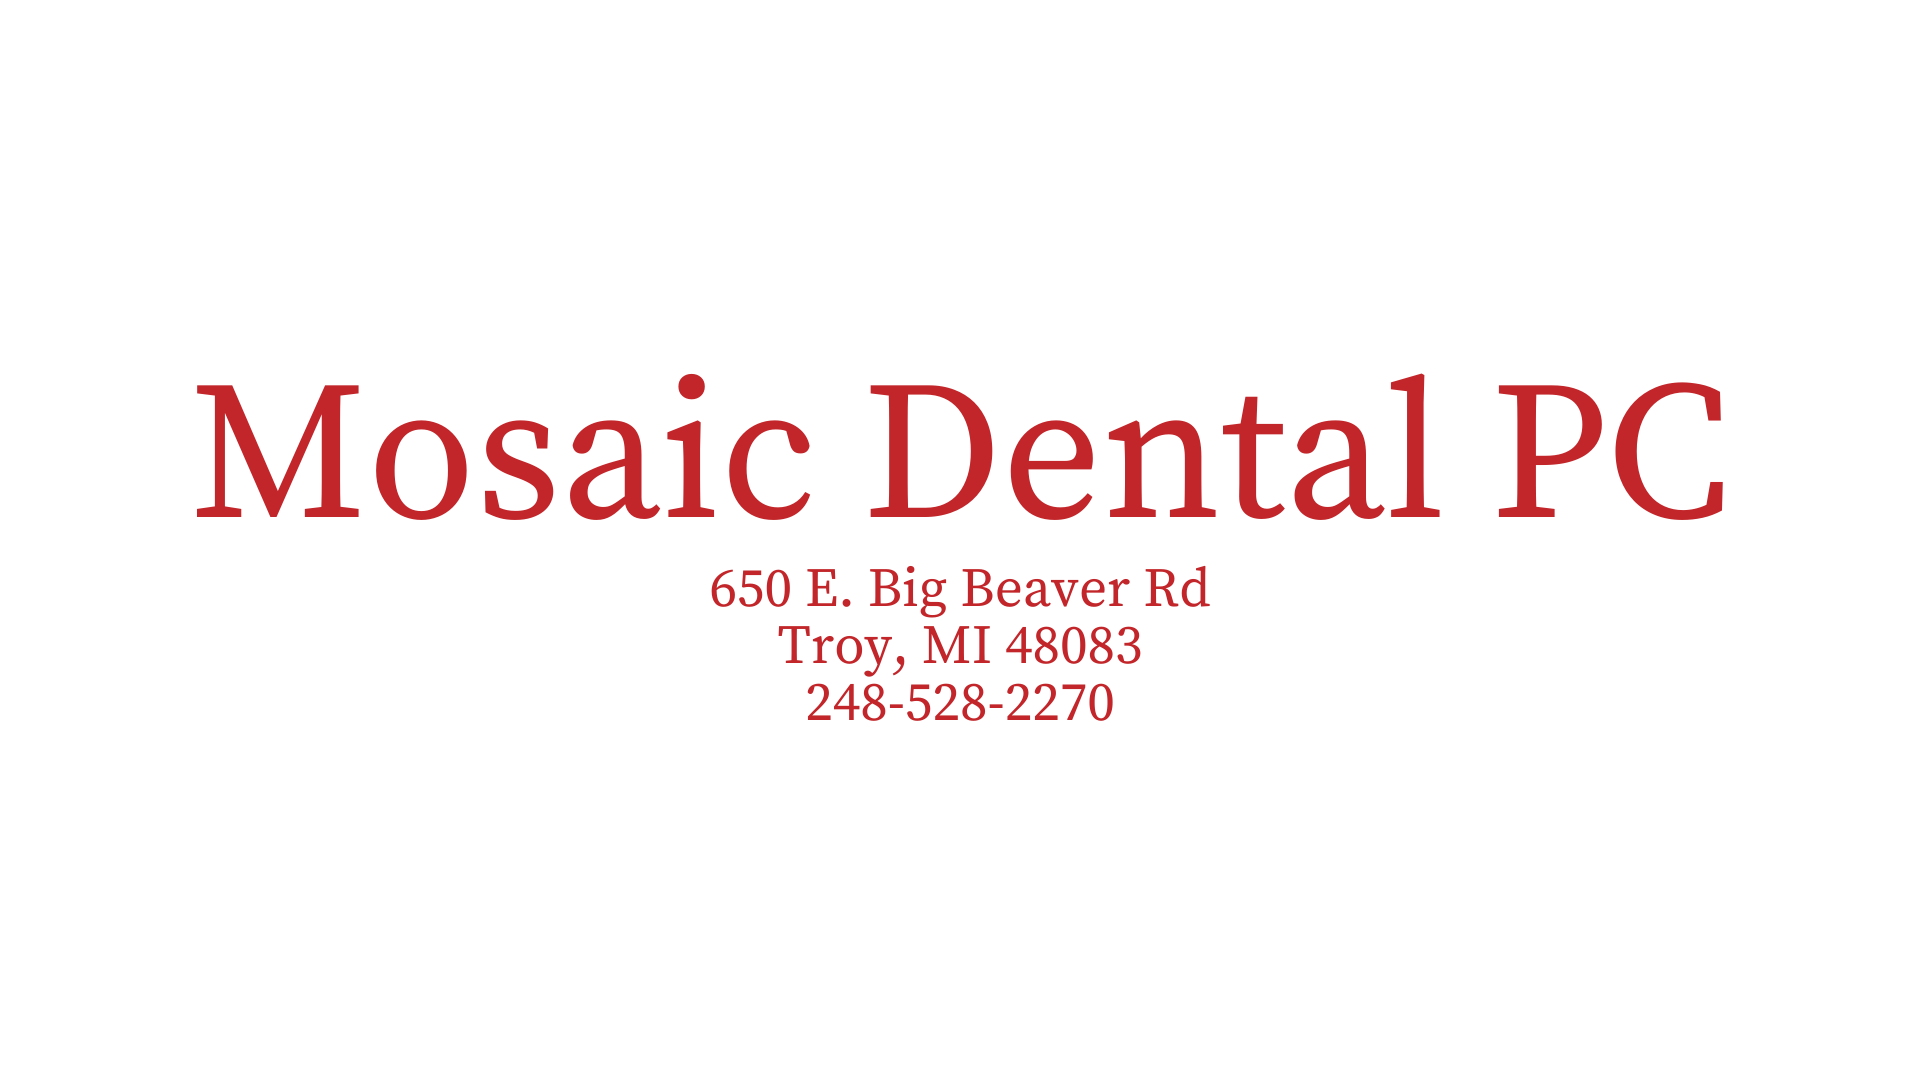 Mosaic Dental logo for website